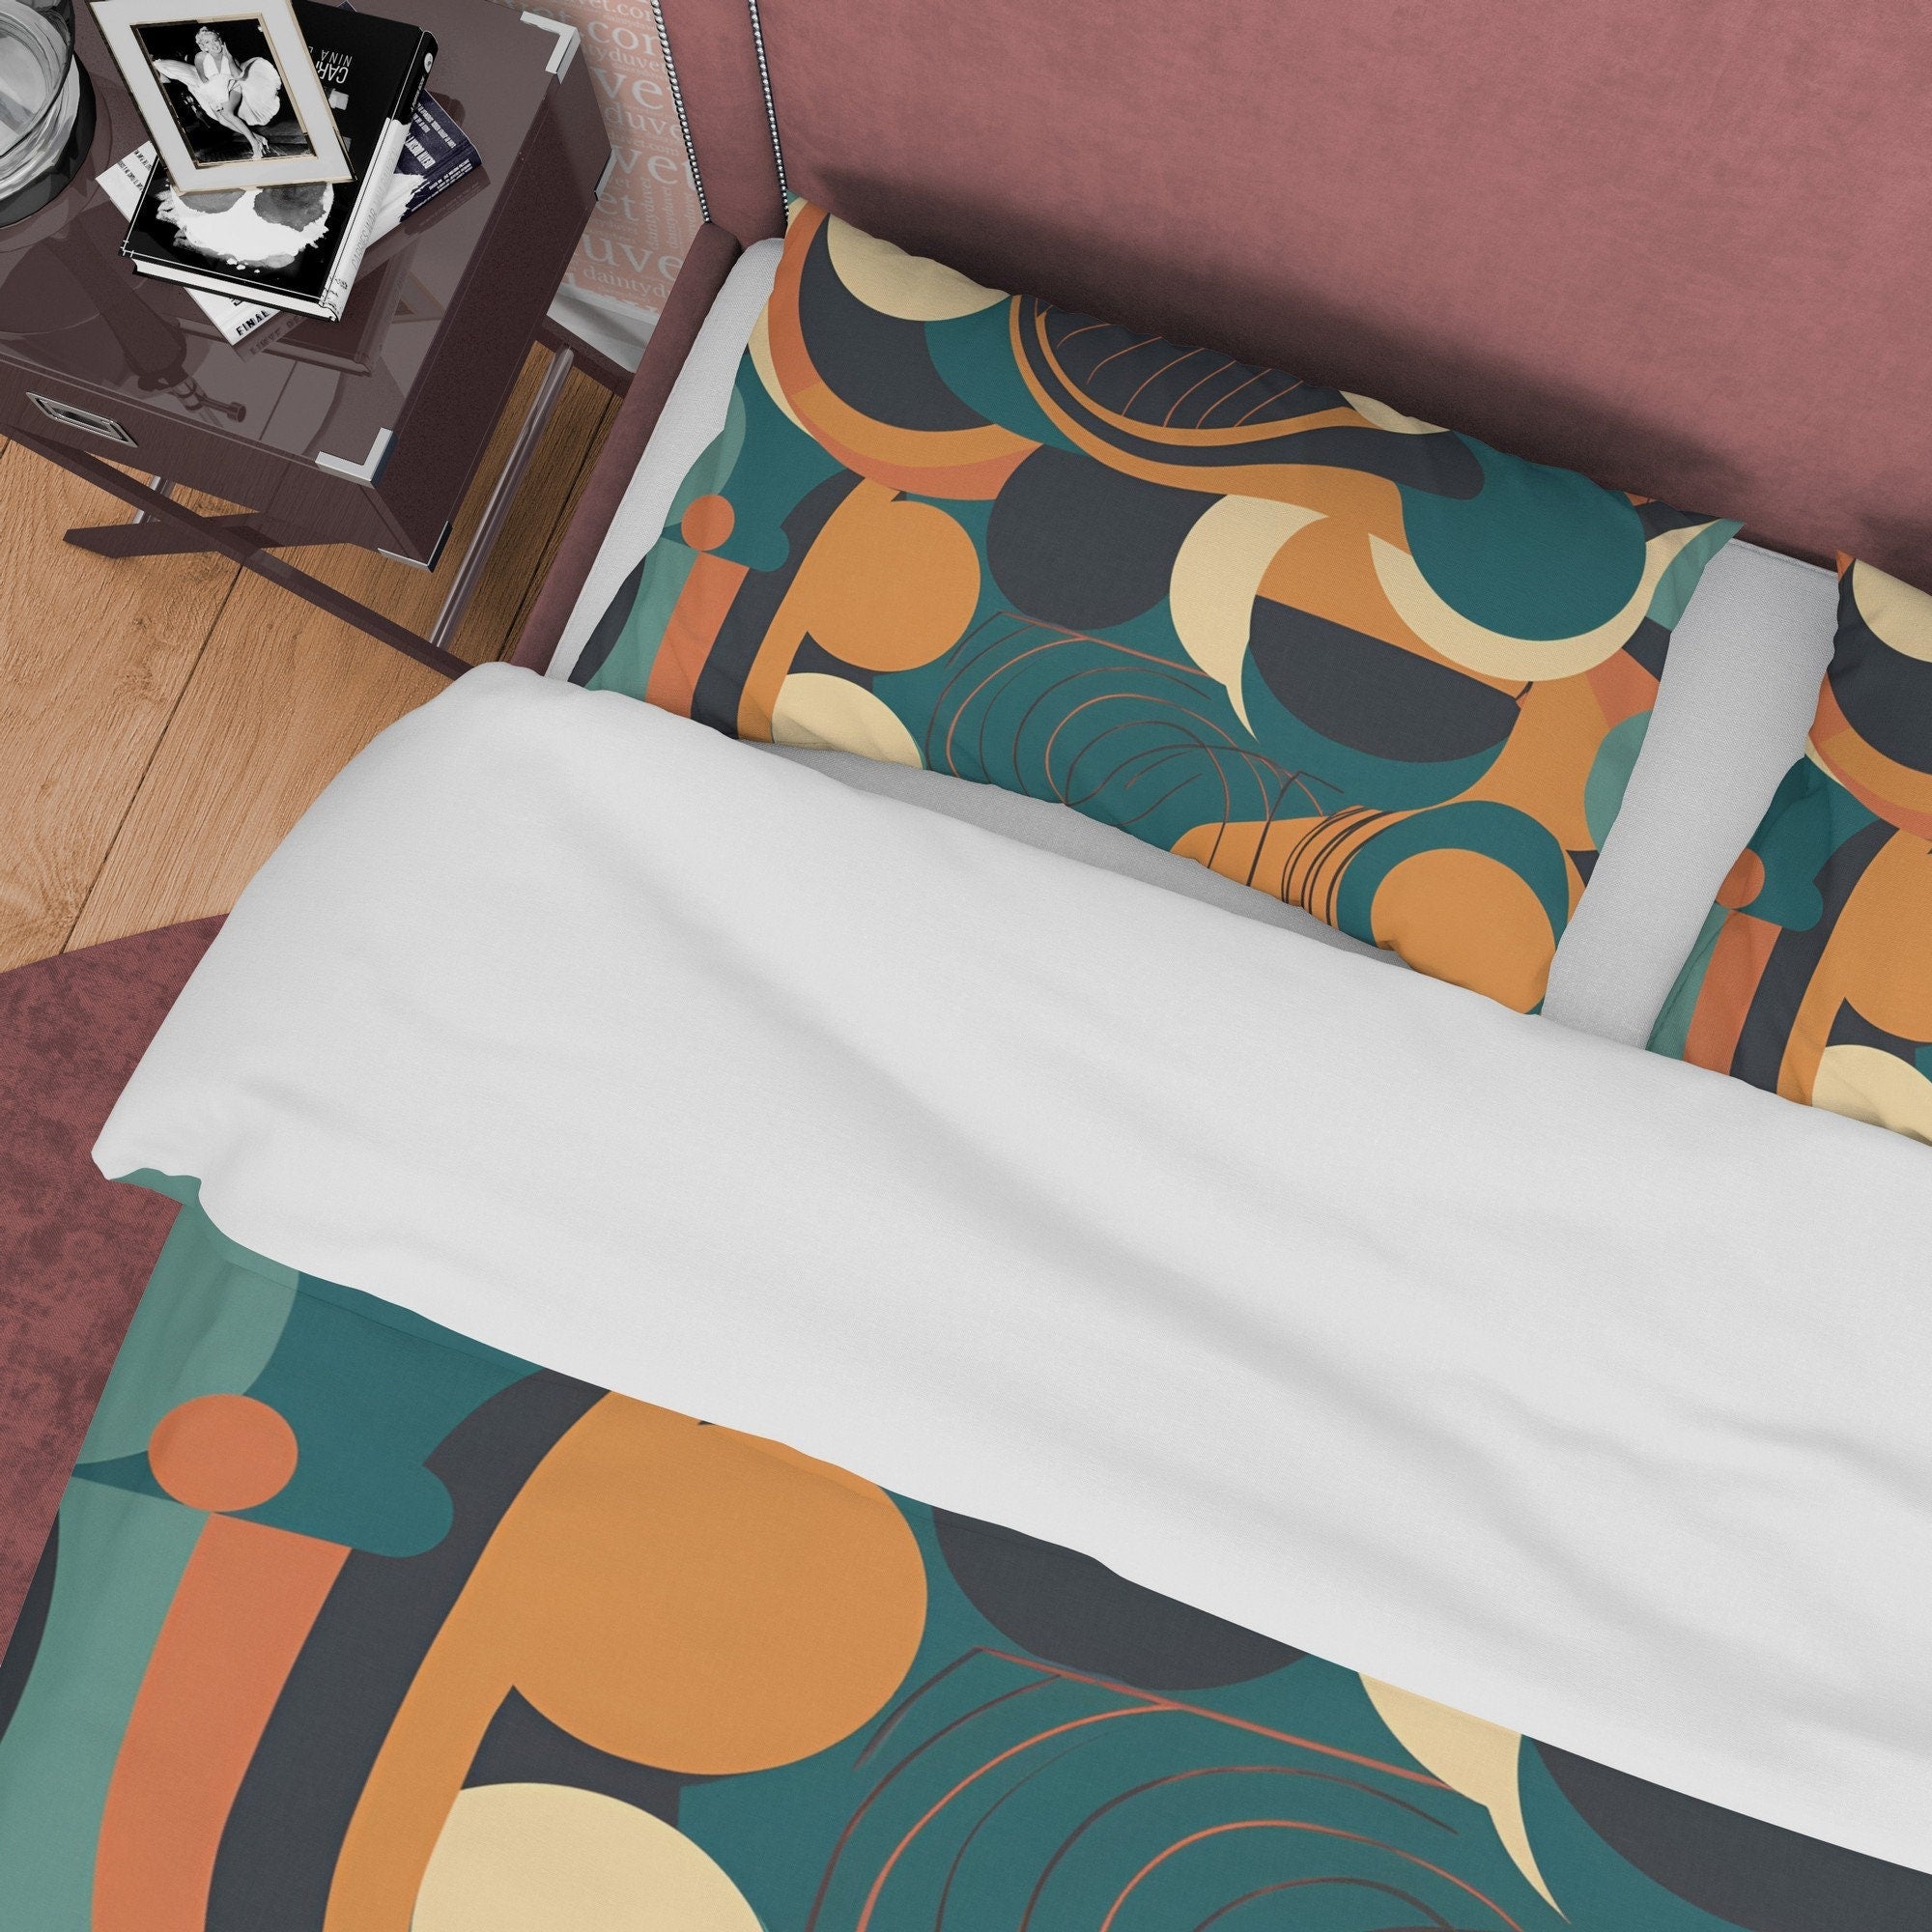 Geometric Green Retro Bedding Set, Coffee Brown Duvet Cover, Unique Vintage Pattern Quilt Cover, 70's Design Bed Cover, Zipper Bedding